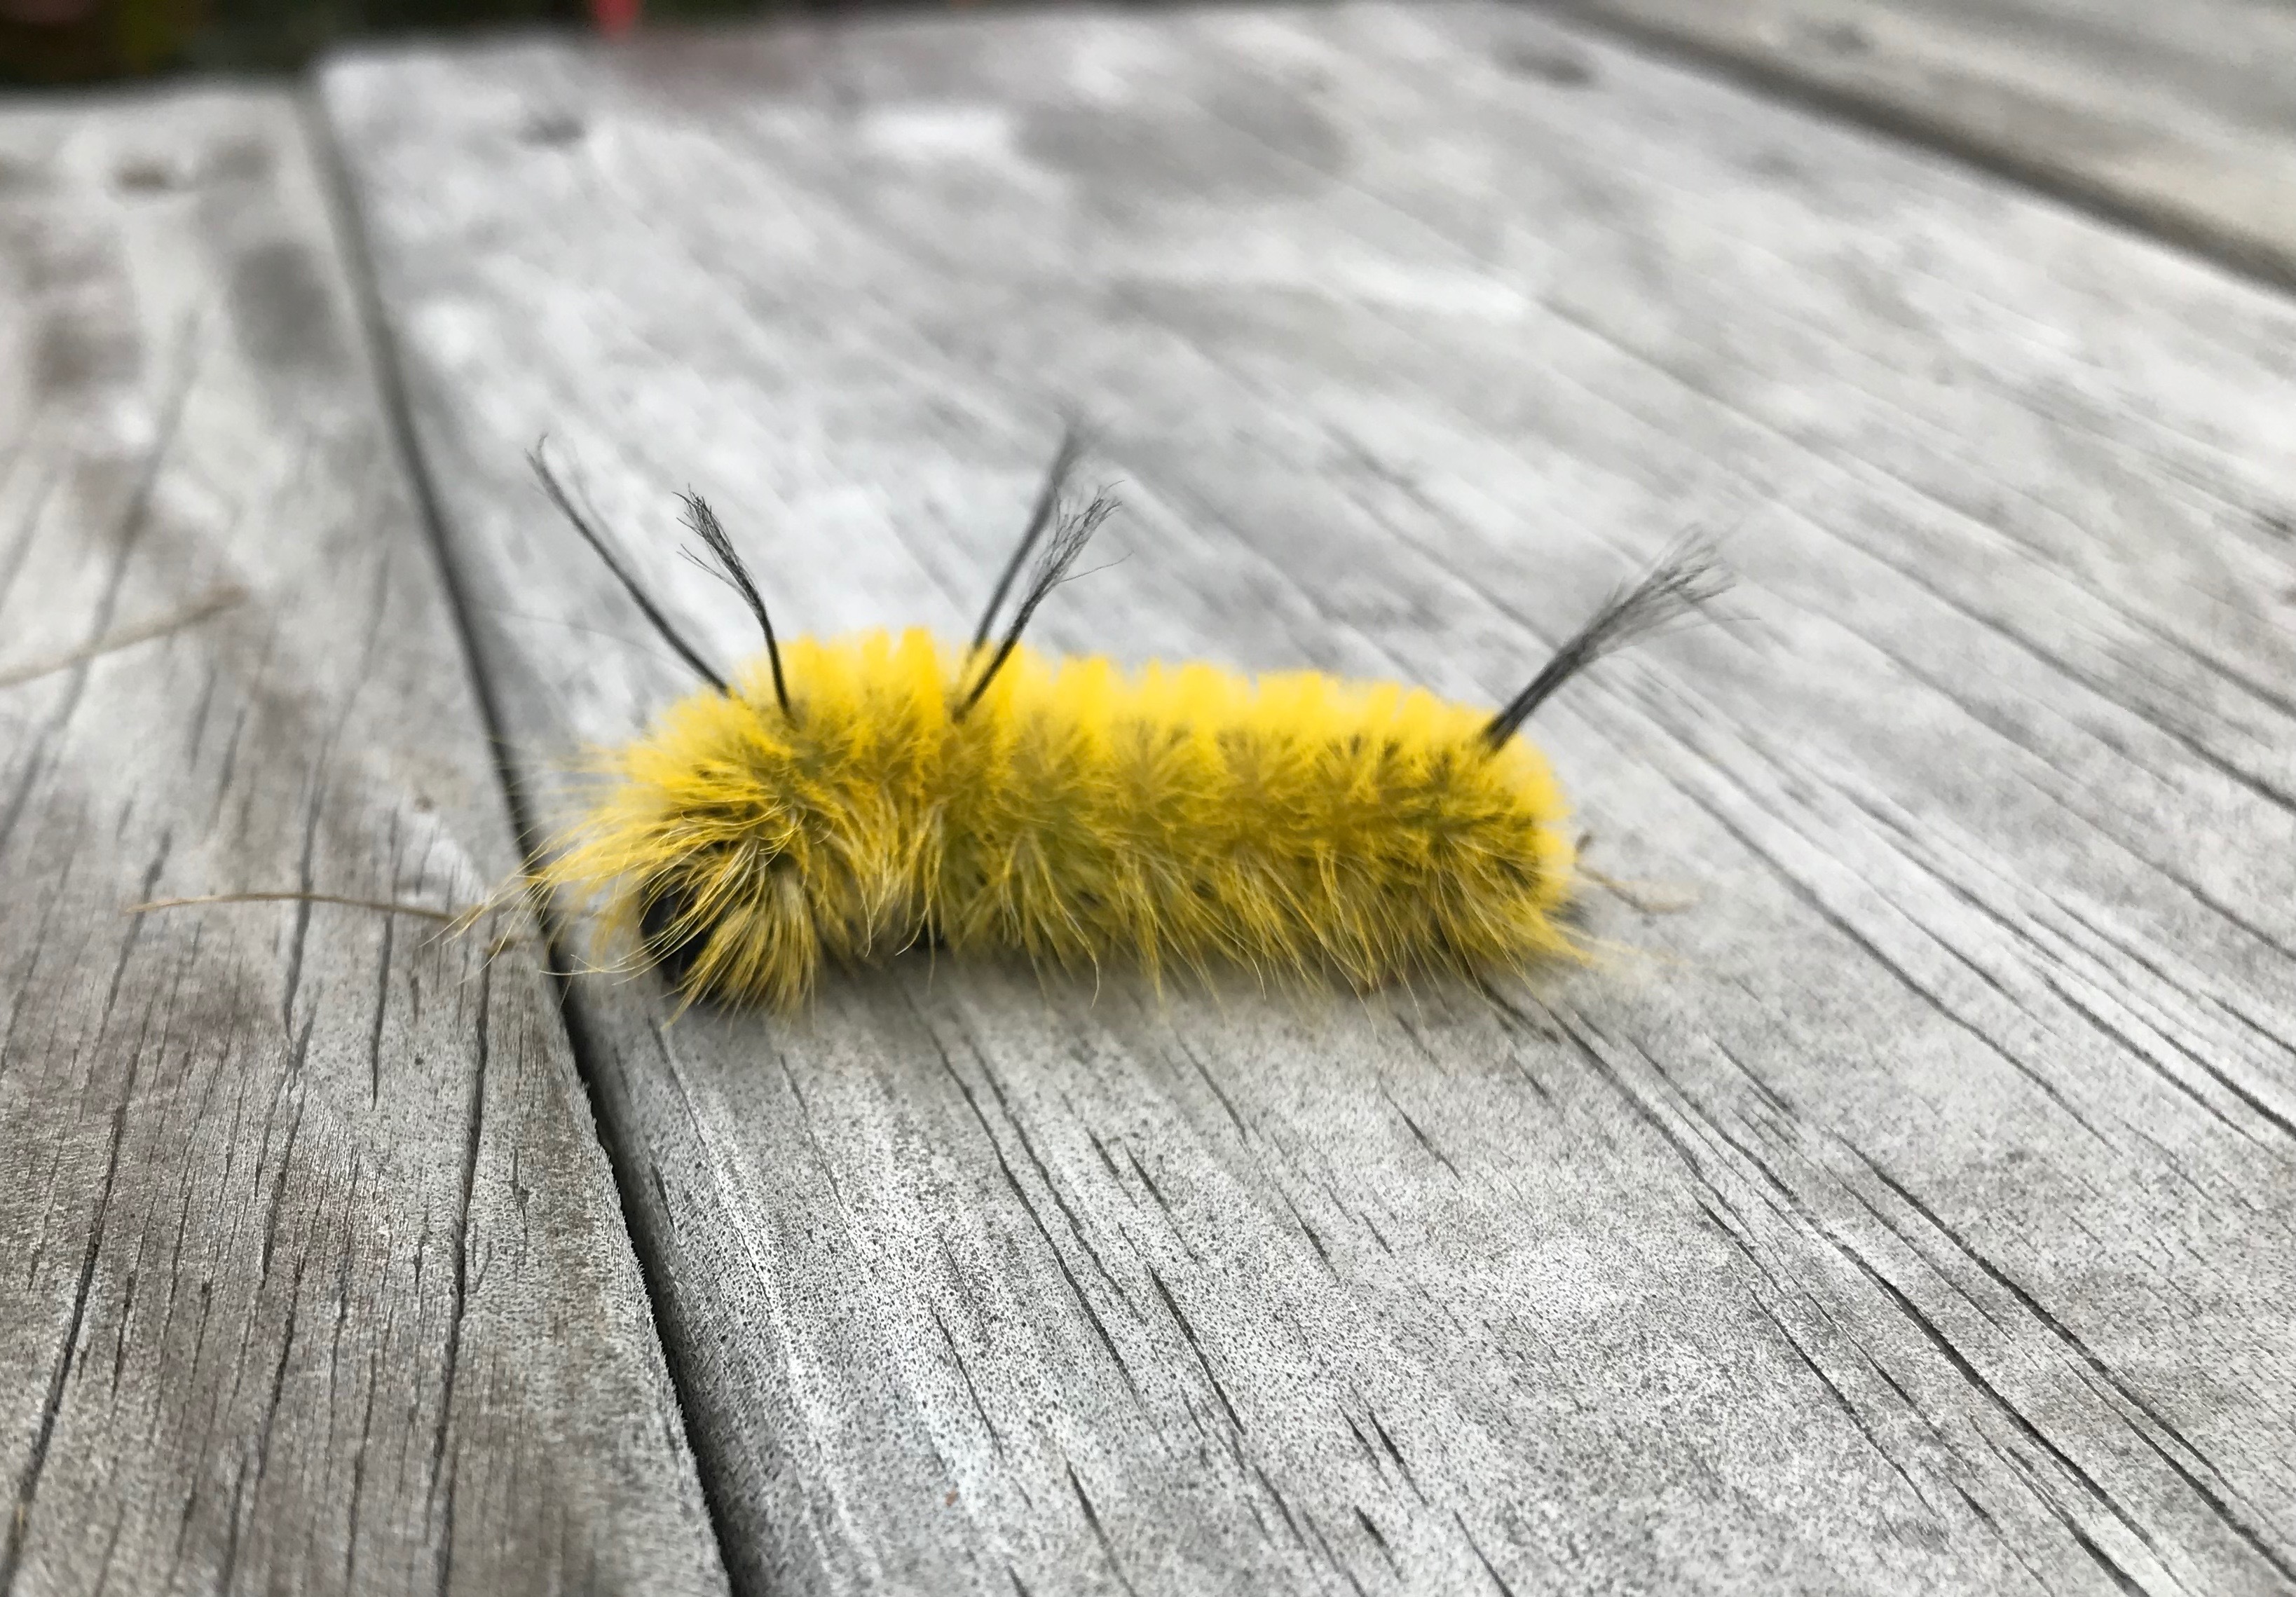 An American Dagger Moth Caterpillar brightens up the boardwalk. Photo by Lynne Vachon